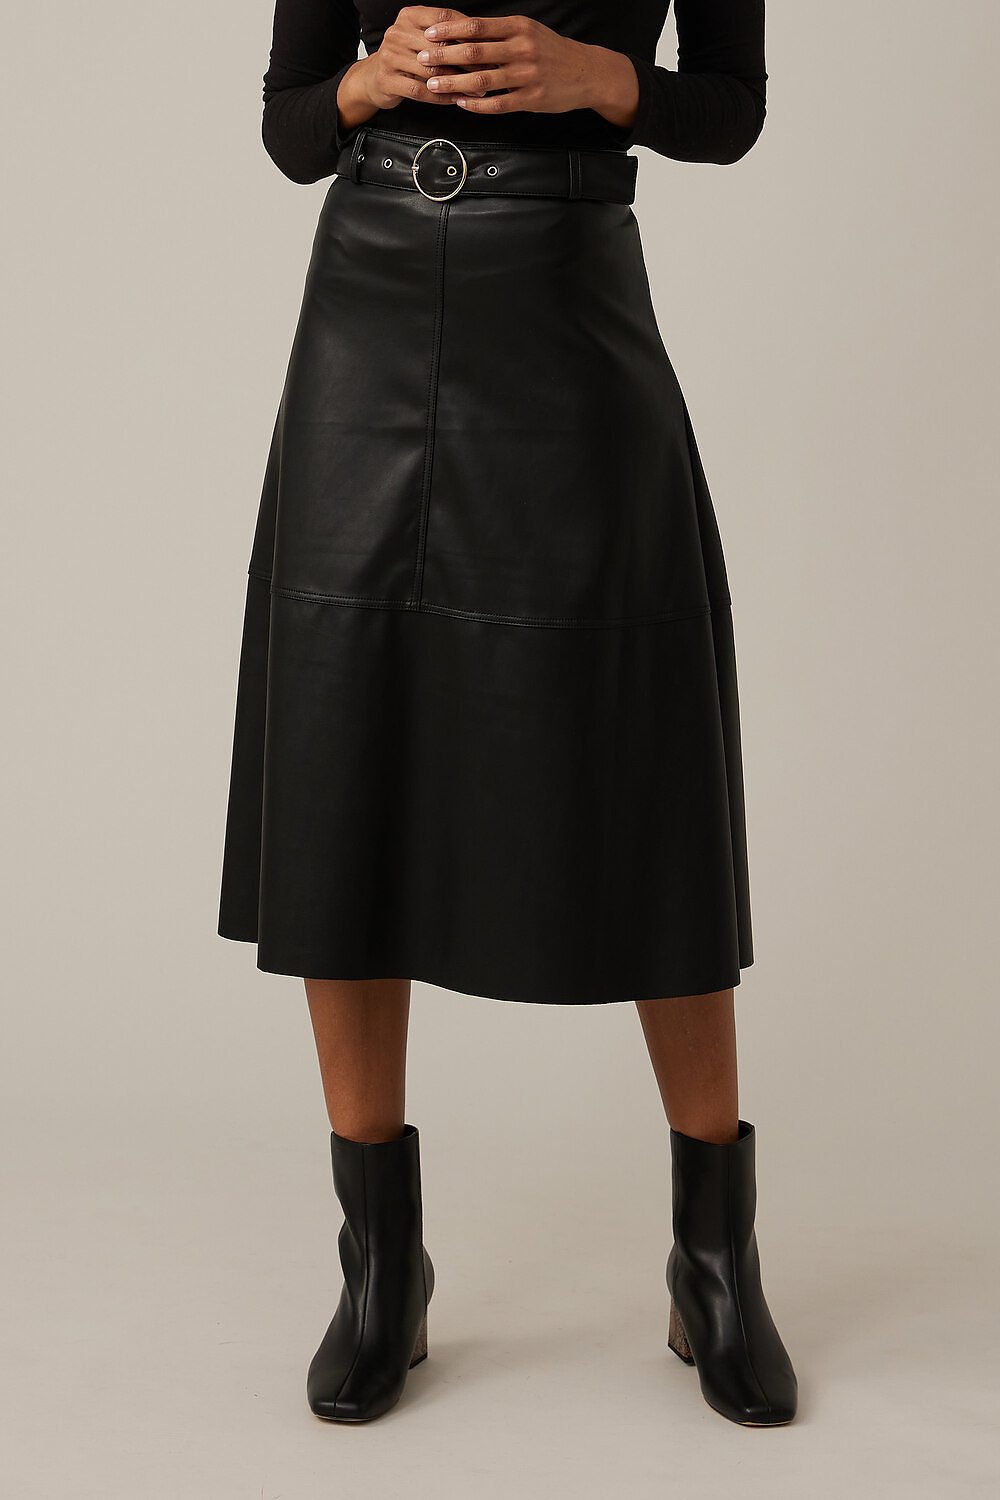 Emproved Vegan Leather Midi Skirt Style A2264. Black